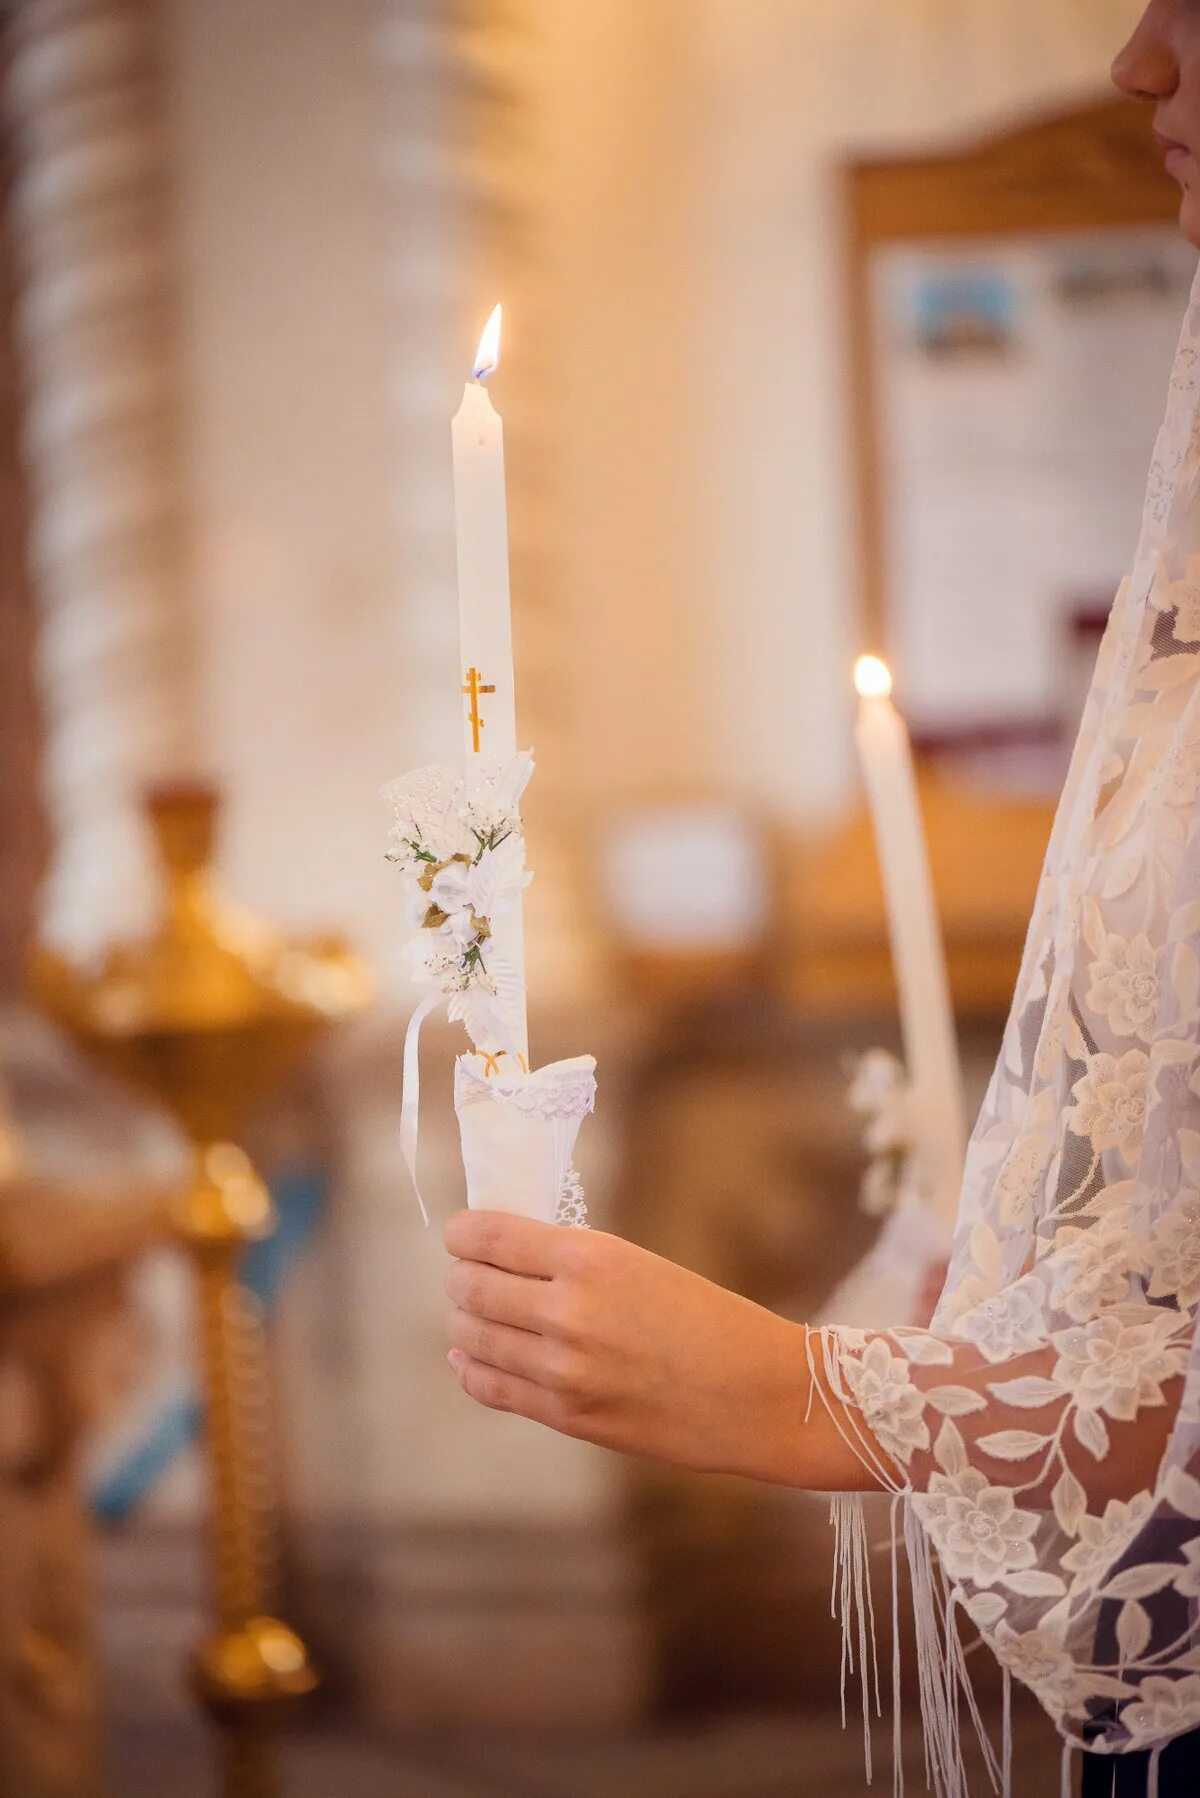 Церемония в церкви. Венчание в церкви. Венчальные свечи. Красивое венчание. Церемония венчания.